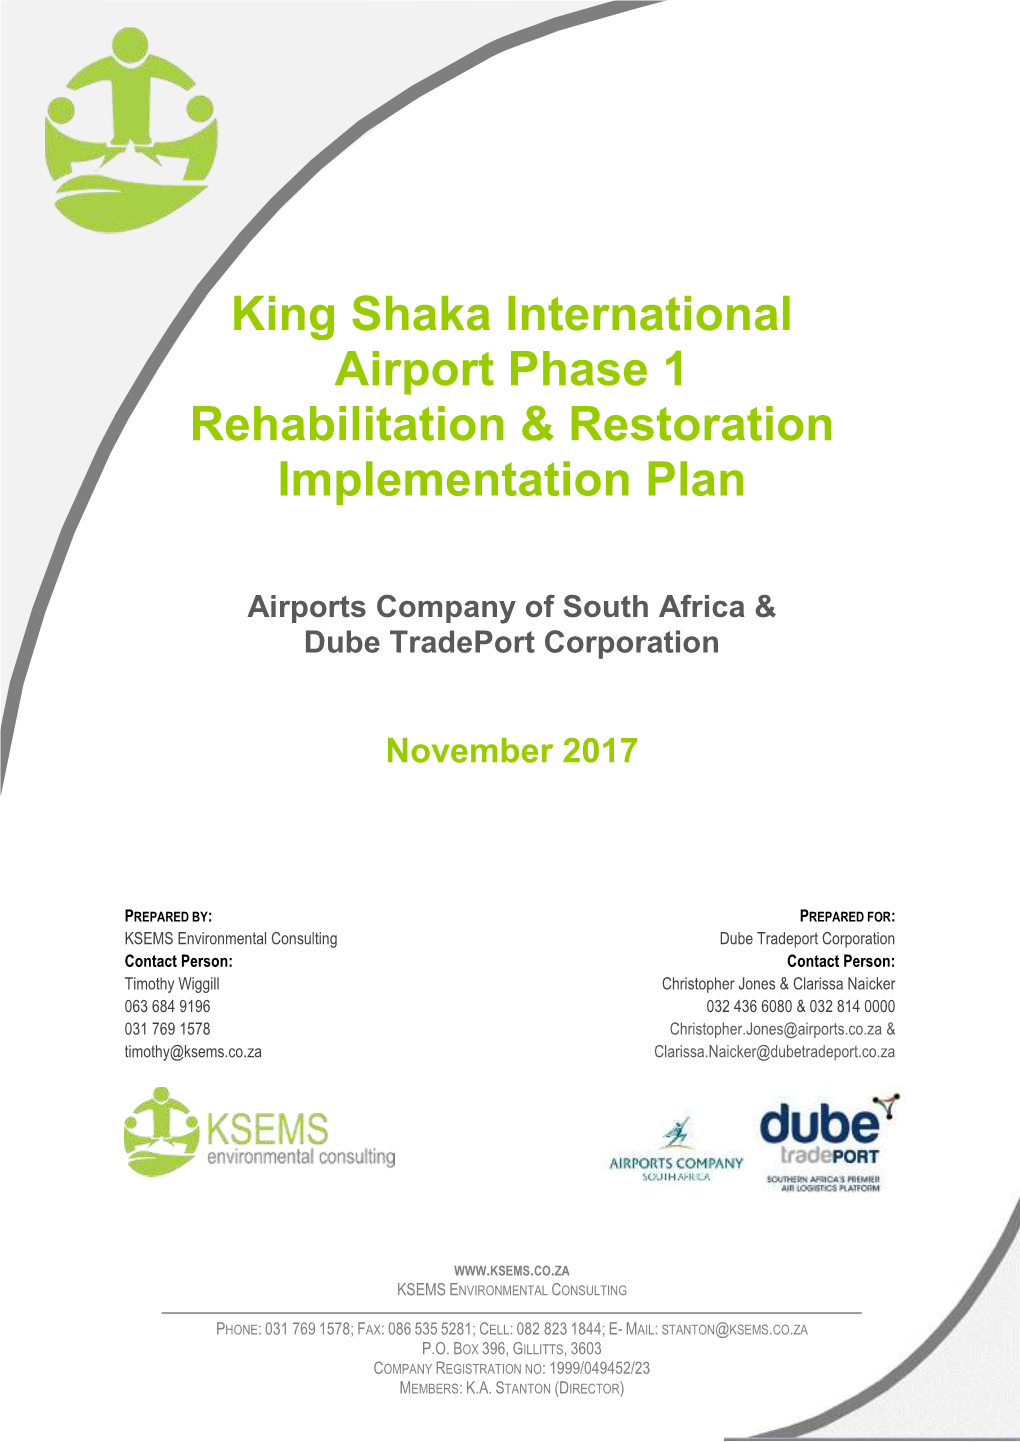 King Shaka International Airport Phase 1 Rehabilitation & Restoration Implementation Plan November 2017